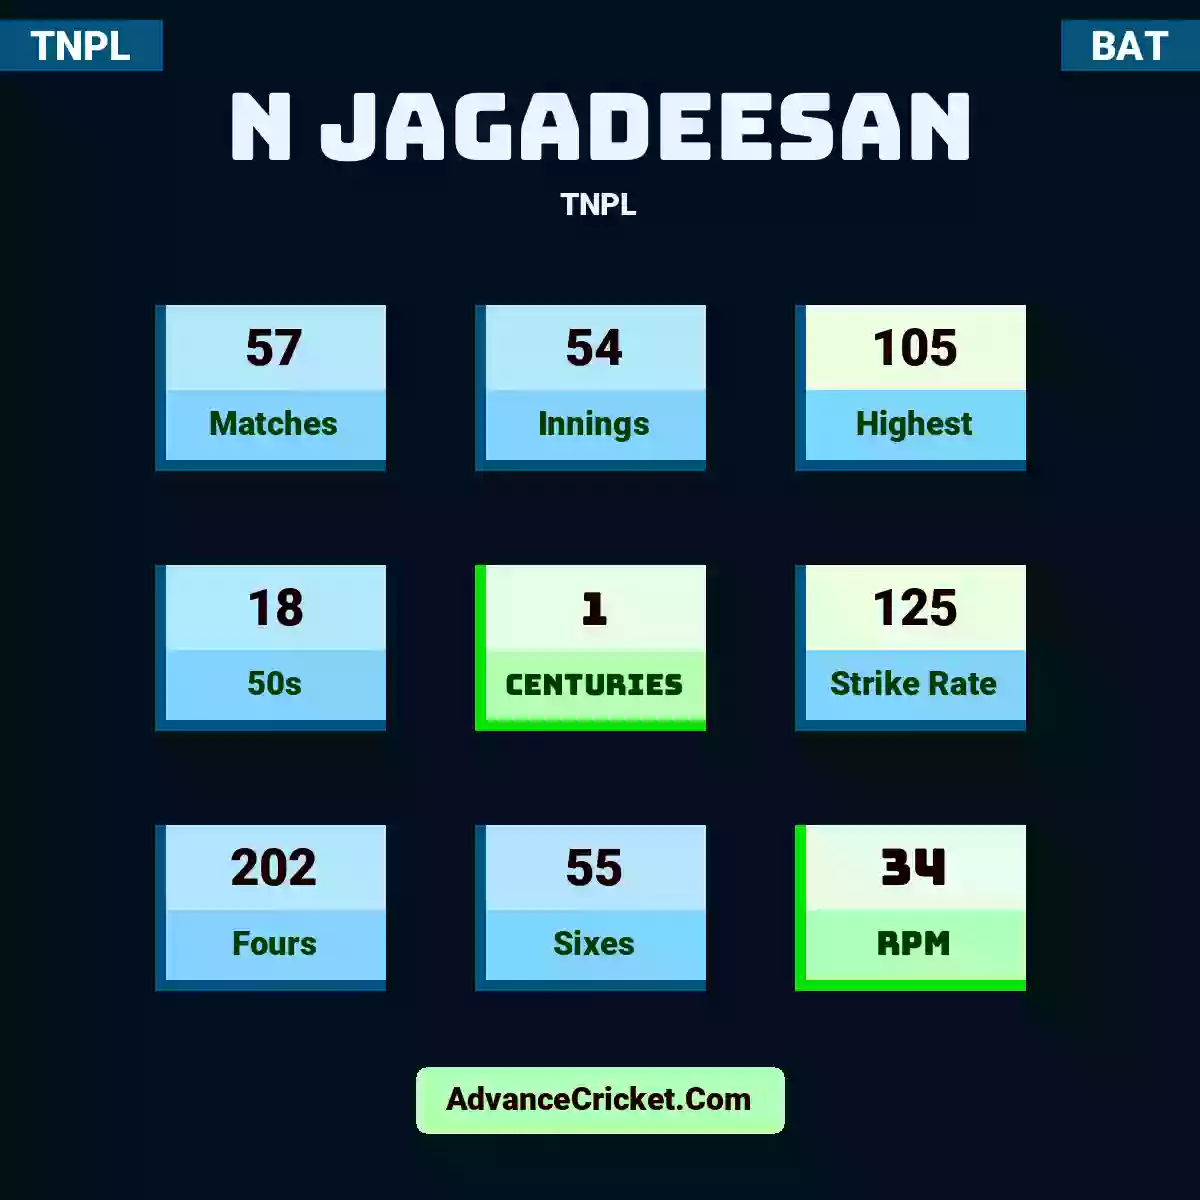 N Jagadeesan TNPL , N Jagadeesan played 57 matches, scored 105 runs as highest, 18 half-centuries, and 1 centuries, with a strike rate of 125. N.Jagadeesan hit 202 fours and 55 sixes, with an RPM of 34.